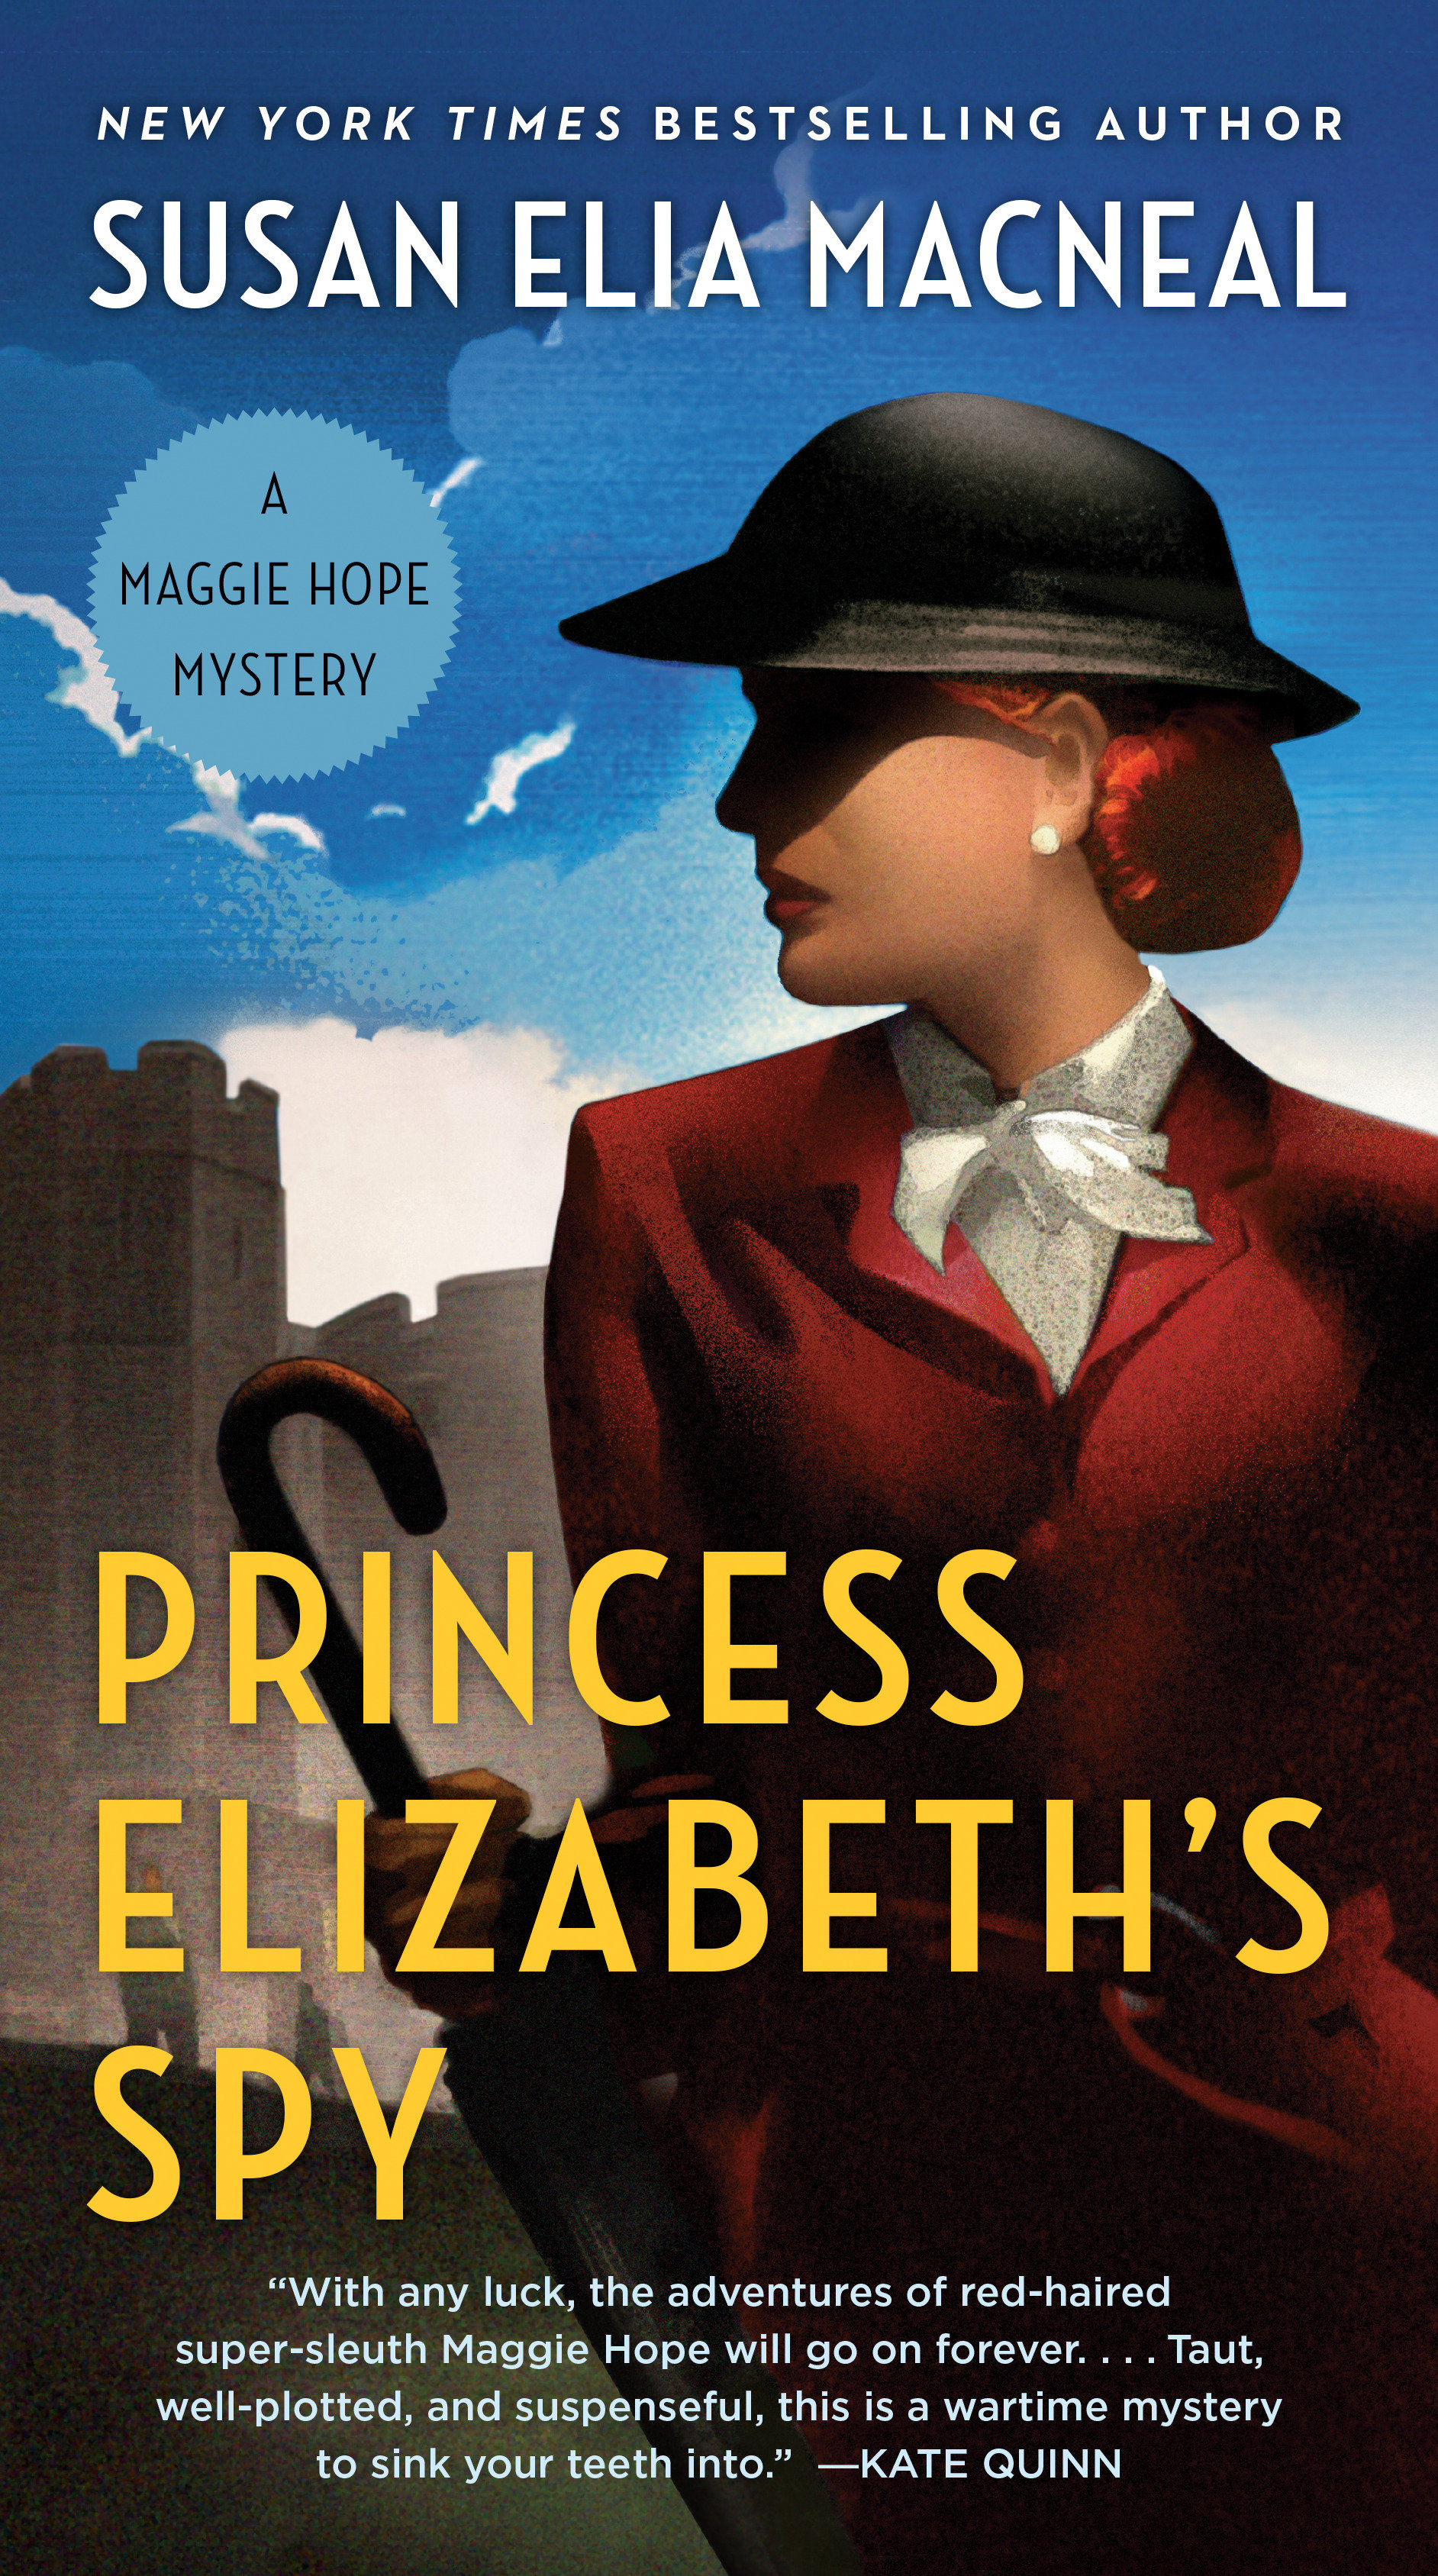 Princess Elizabeth's spy a Maggie Hope mystery cover image